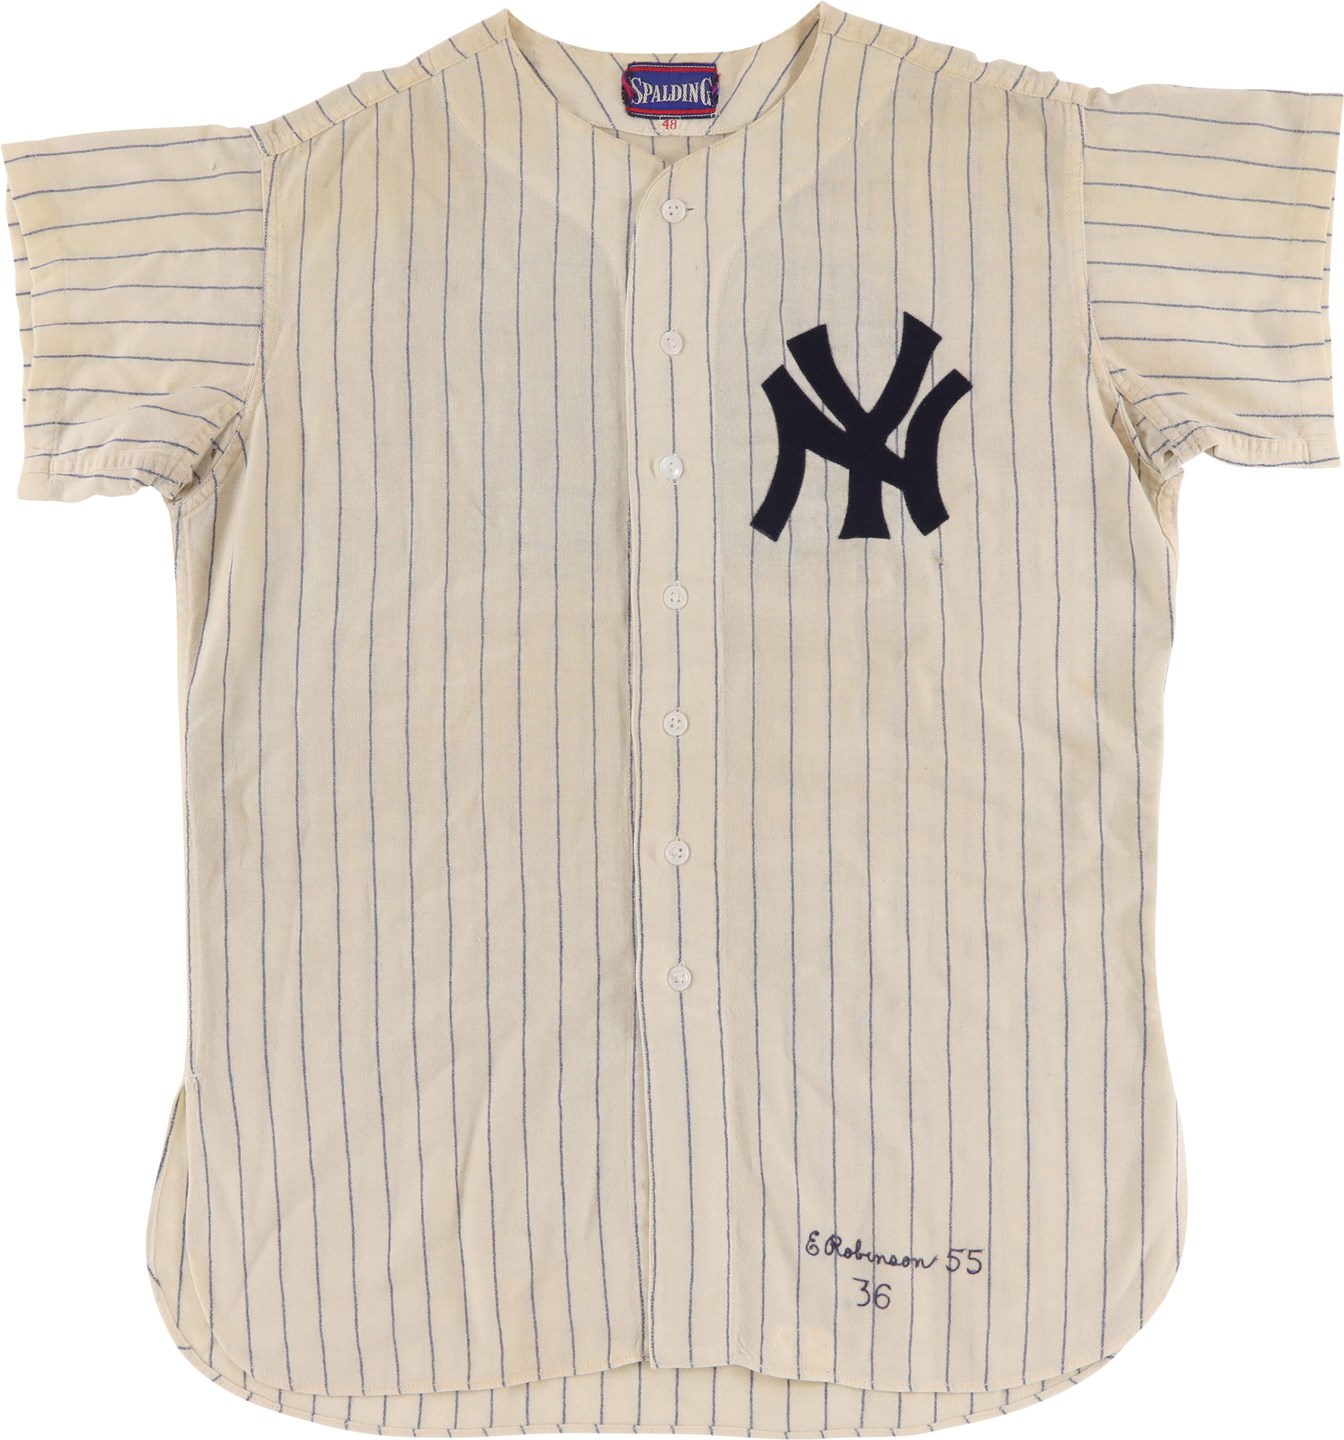 Baseball Equipment - 1955 Eddie Robinson New York Yankees Game Worn Jersey (Photo-Matched)